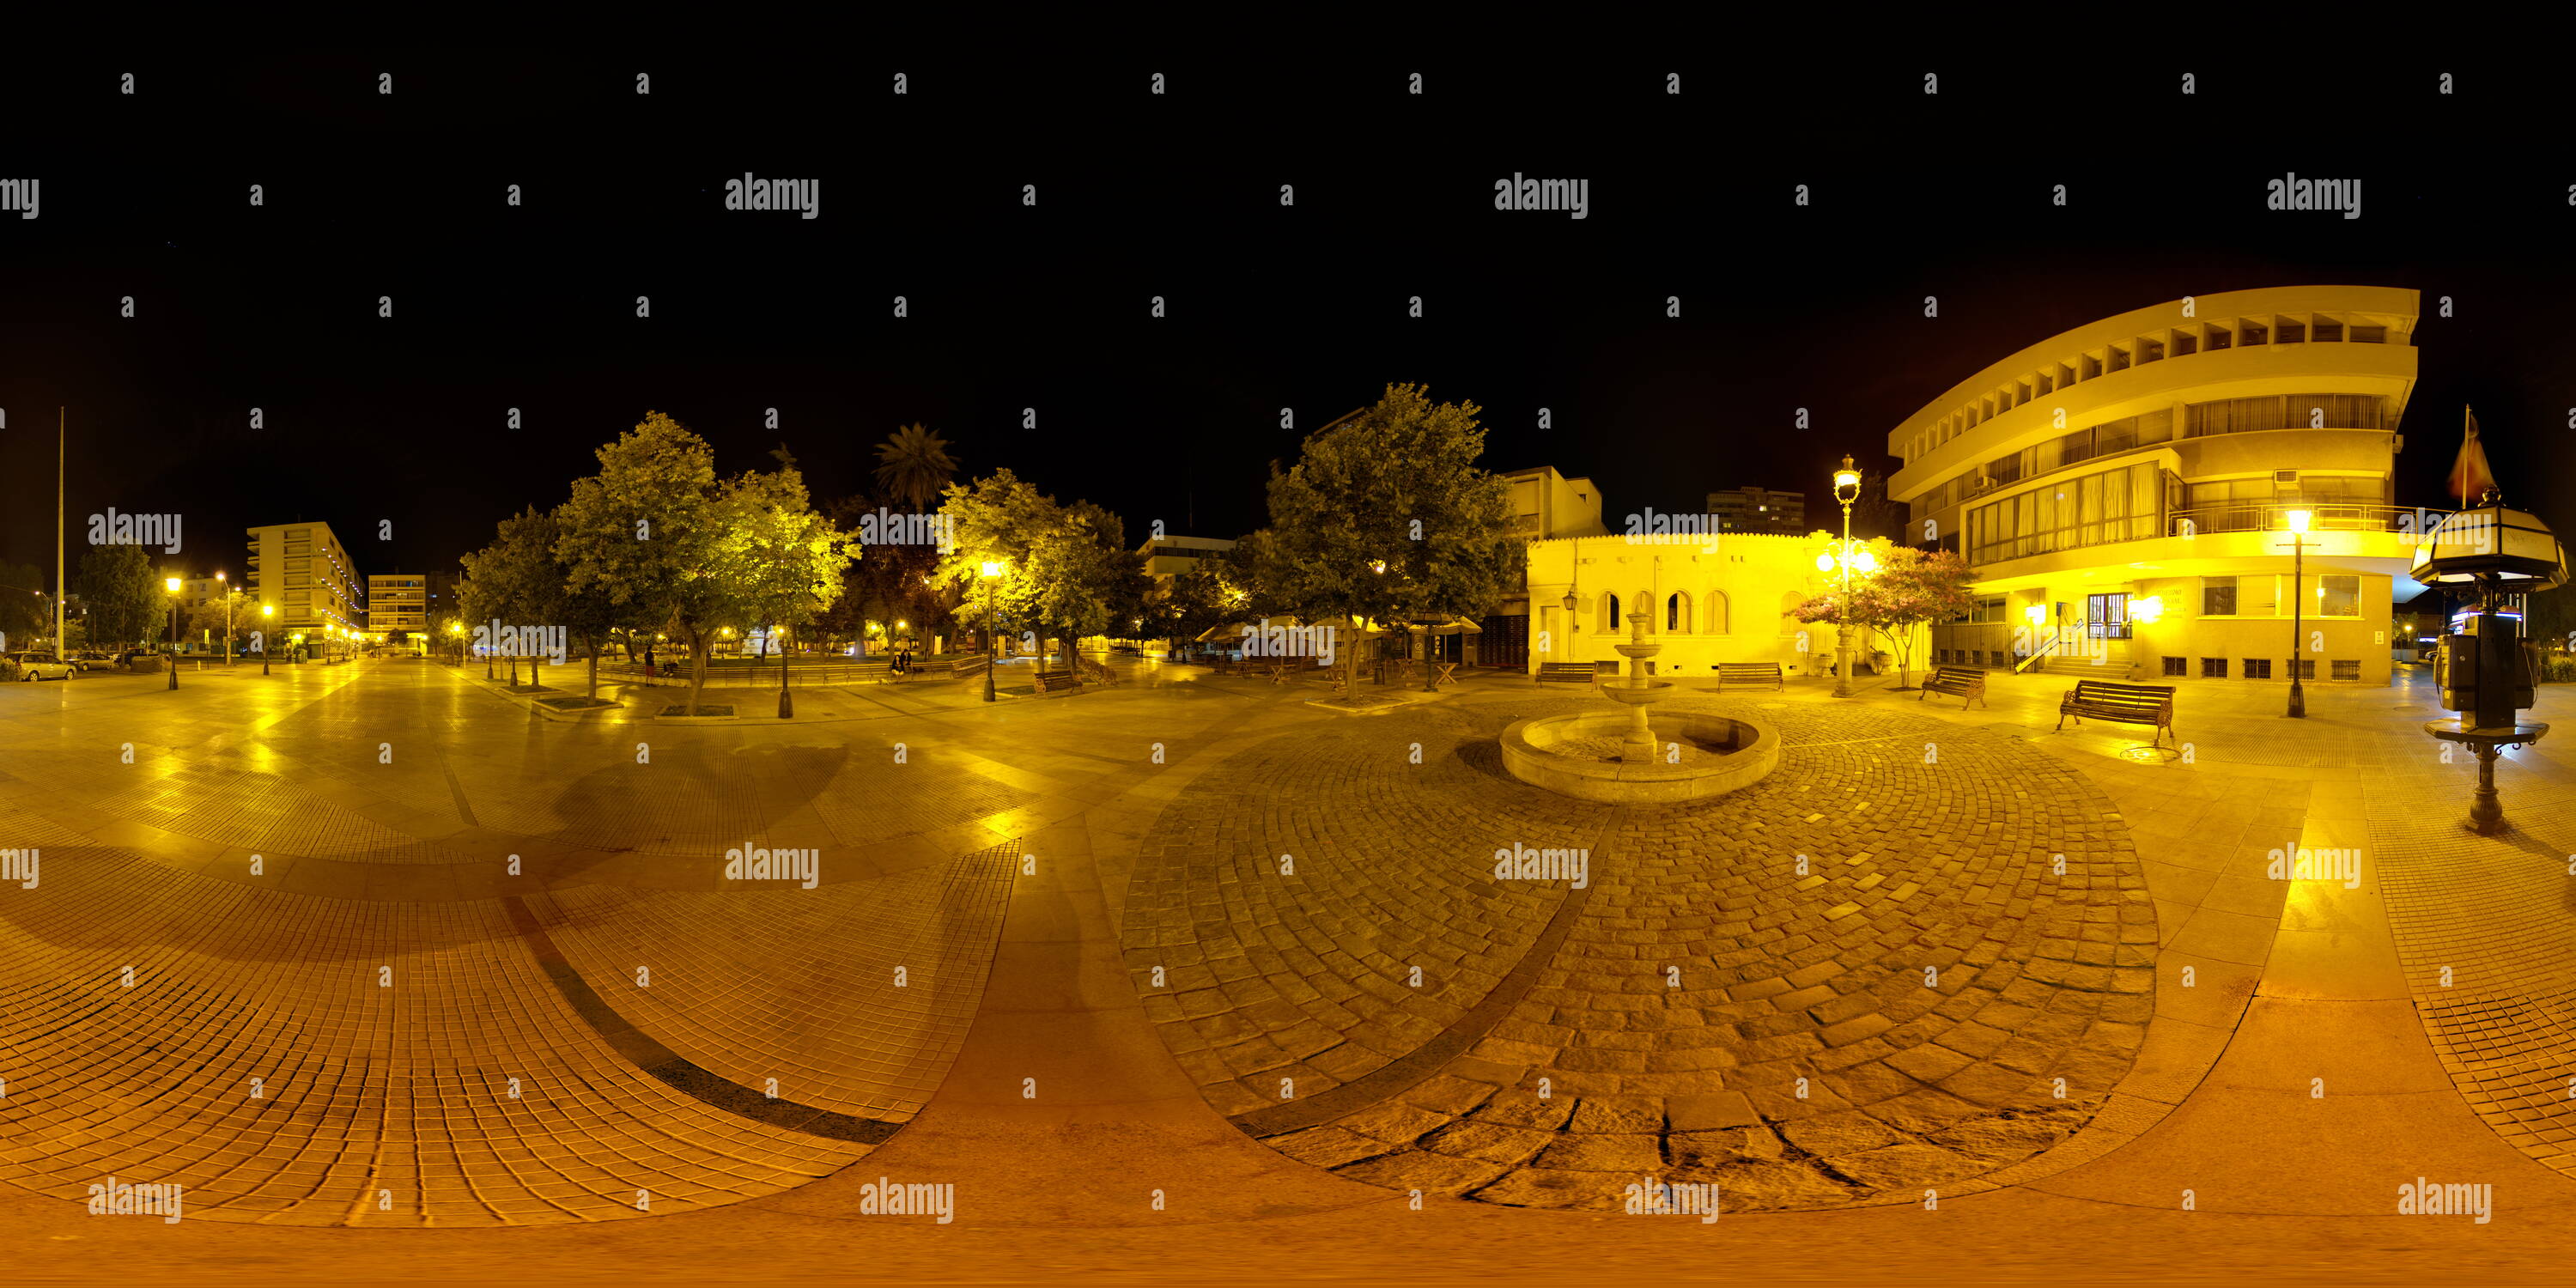 360 degree panoramic view of Plaza Los Héroes - Intendencia de Rancagua